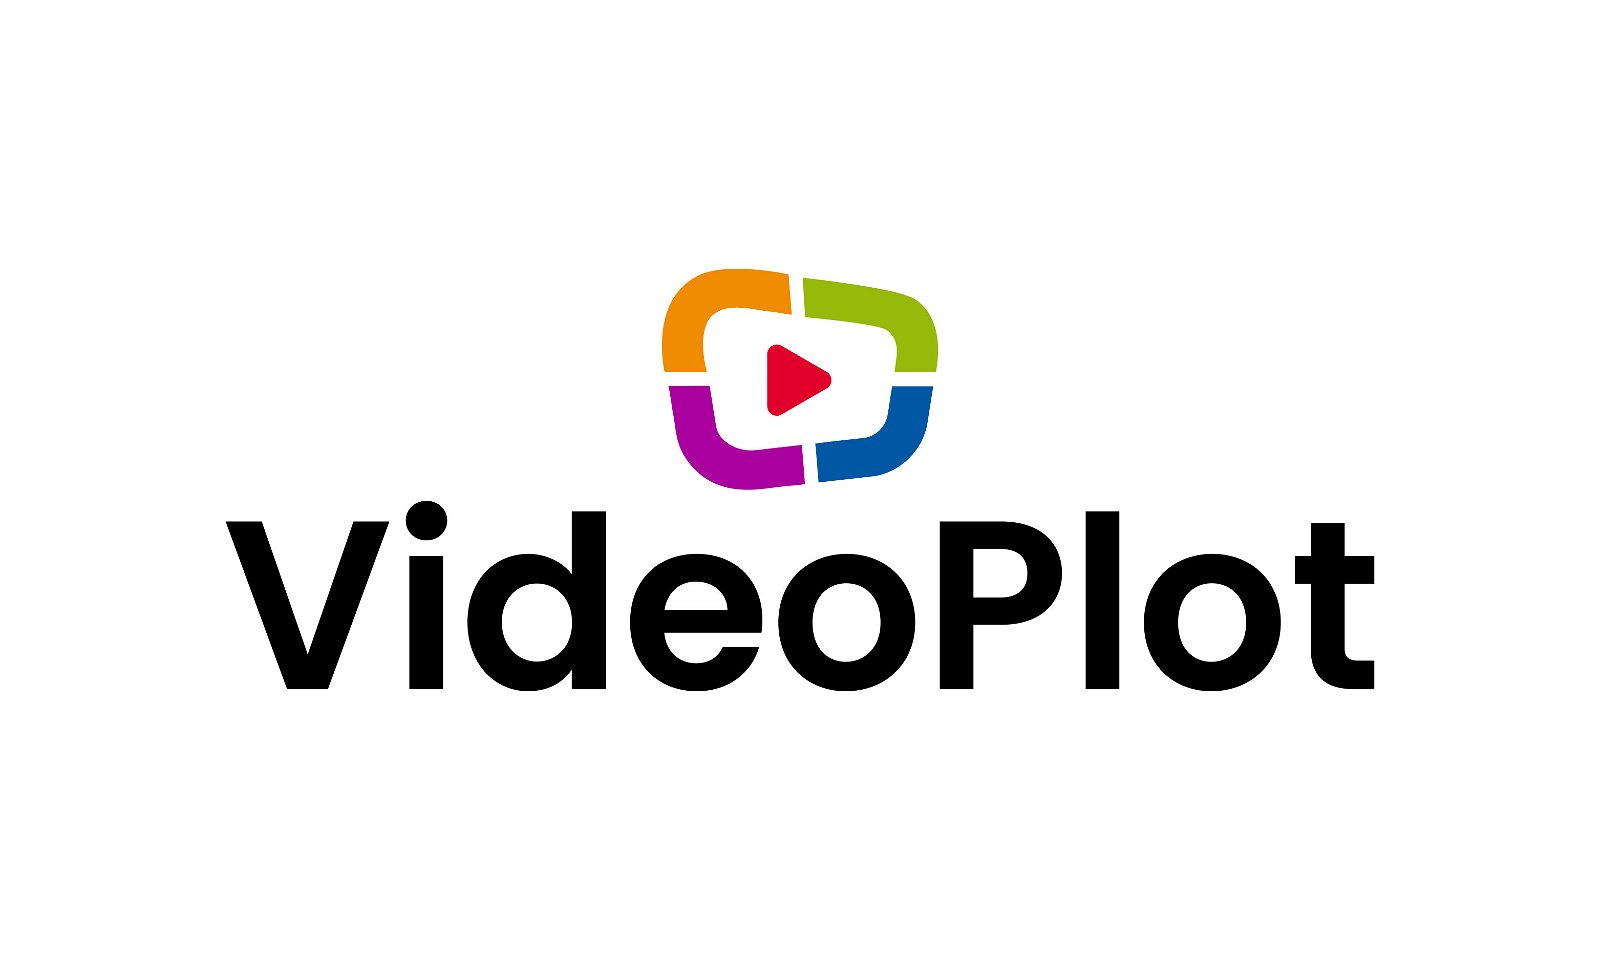 VideoPlot.com - Creative brandable domain for sale